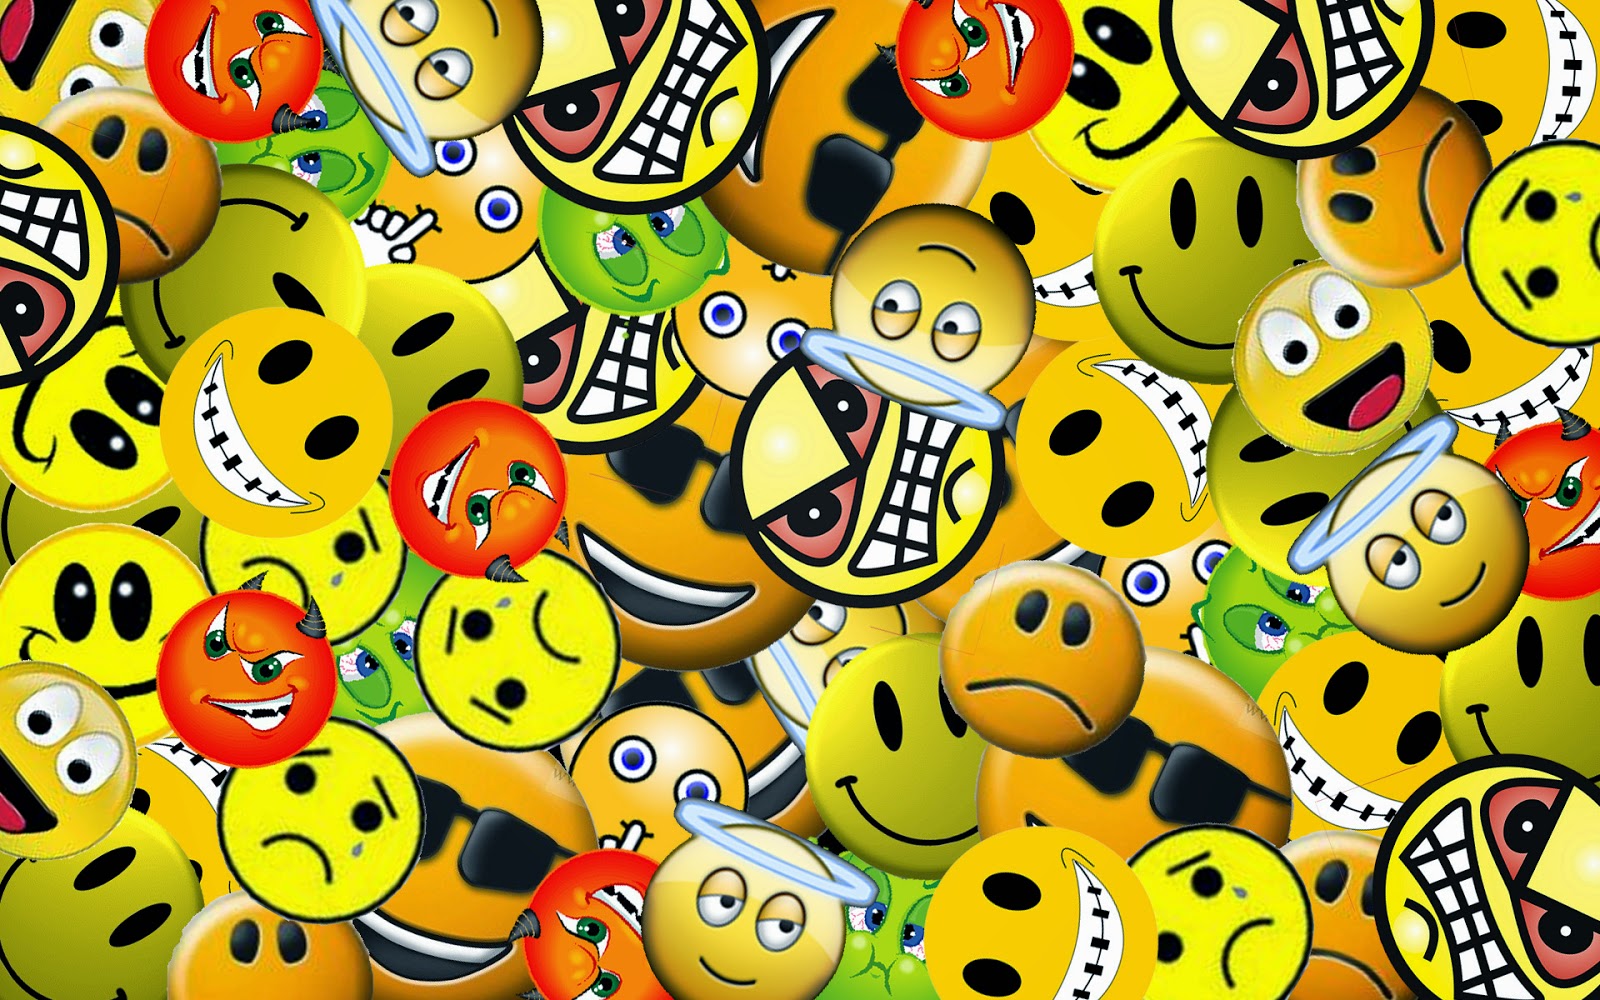 challenging star darshan wallpaper,emoticon,yellow,smiley,organism,smile